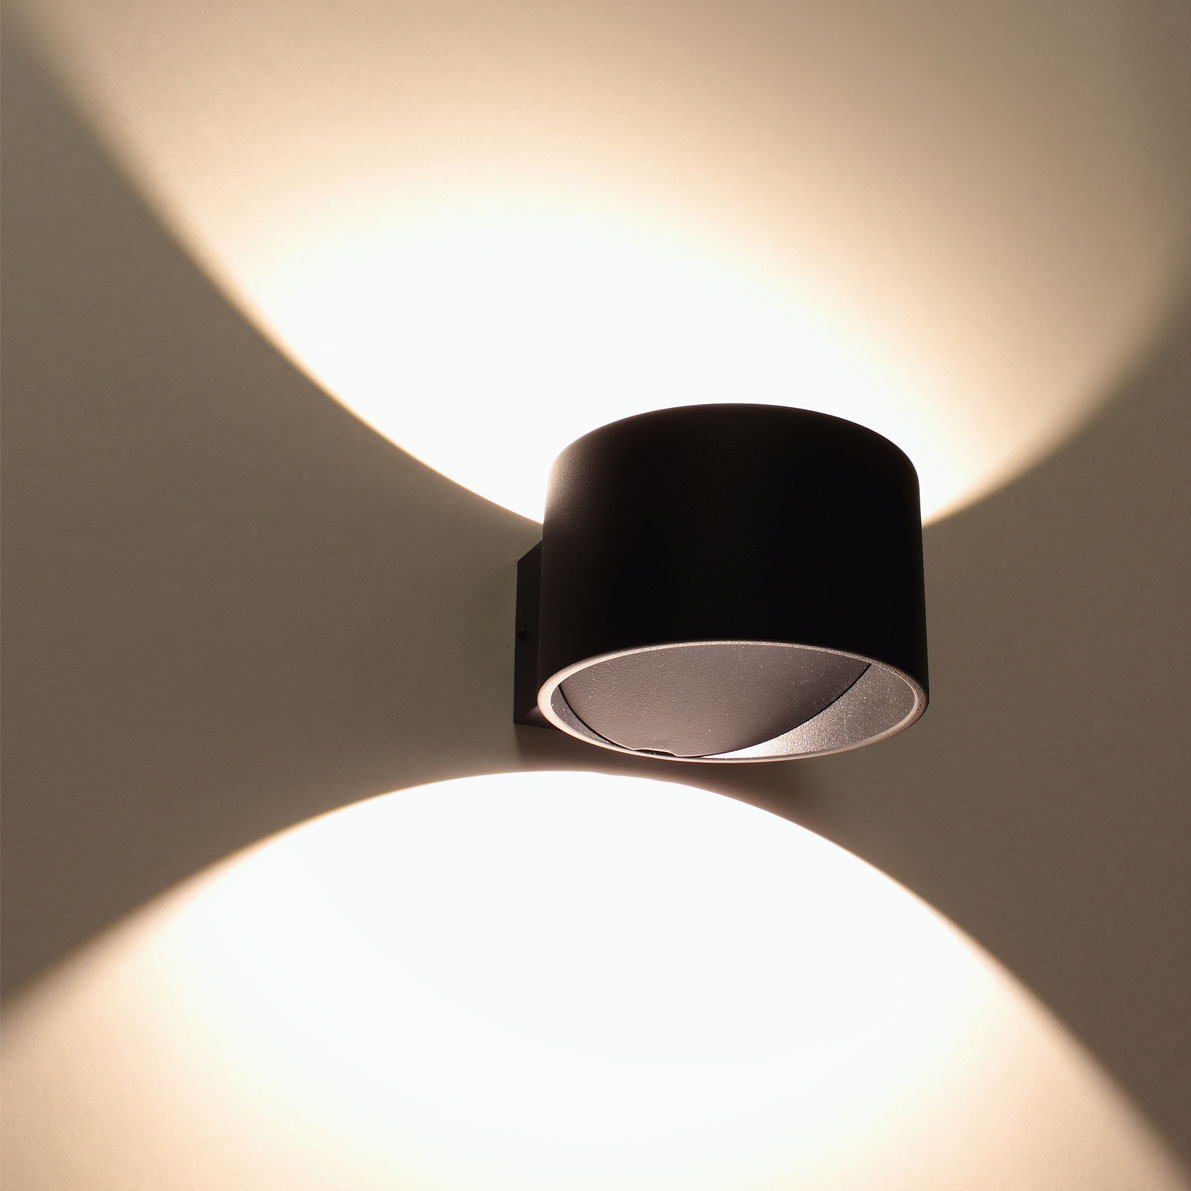 Светодиодные светильники Светильник настенный светодиодный JH-BD-B04 DHL27 (220V, 7W, черный корпус, warm white)